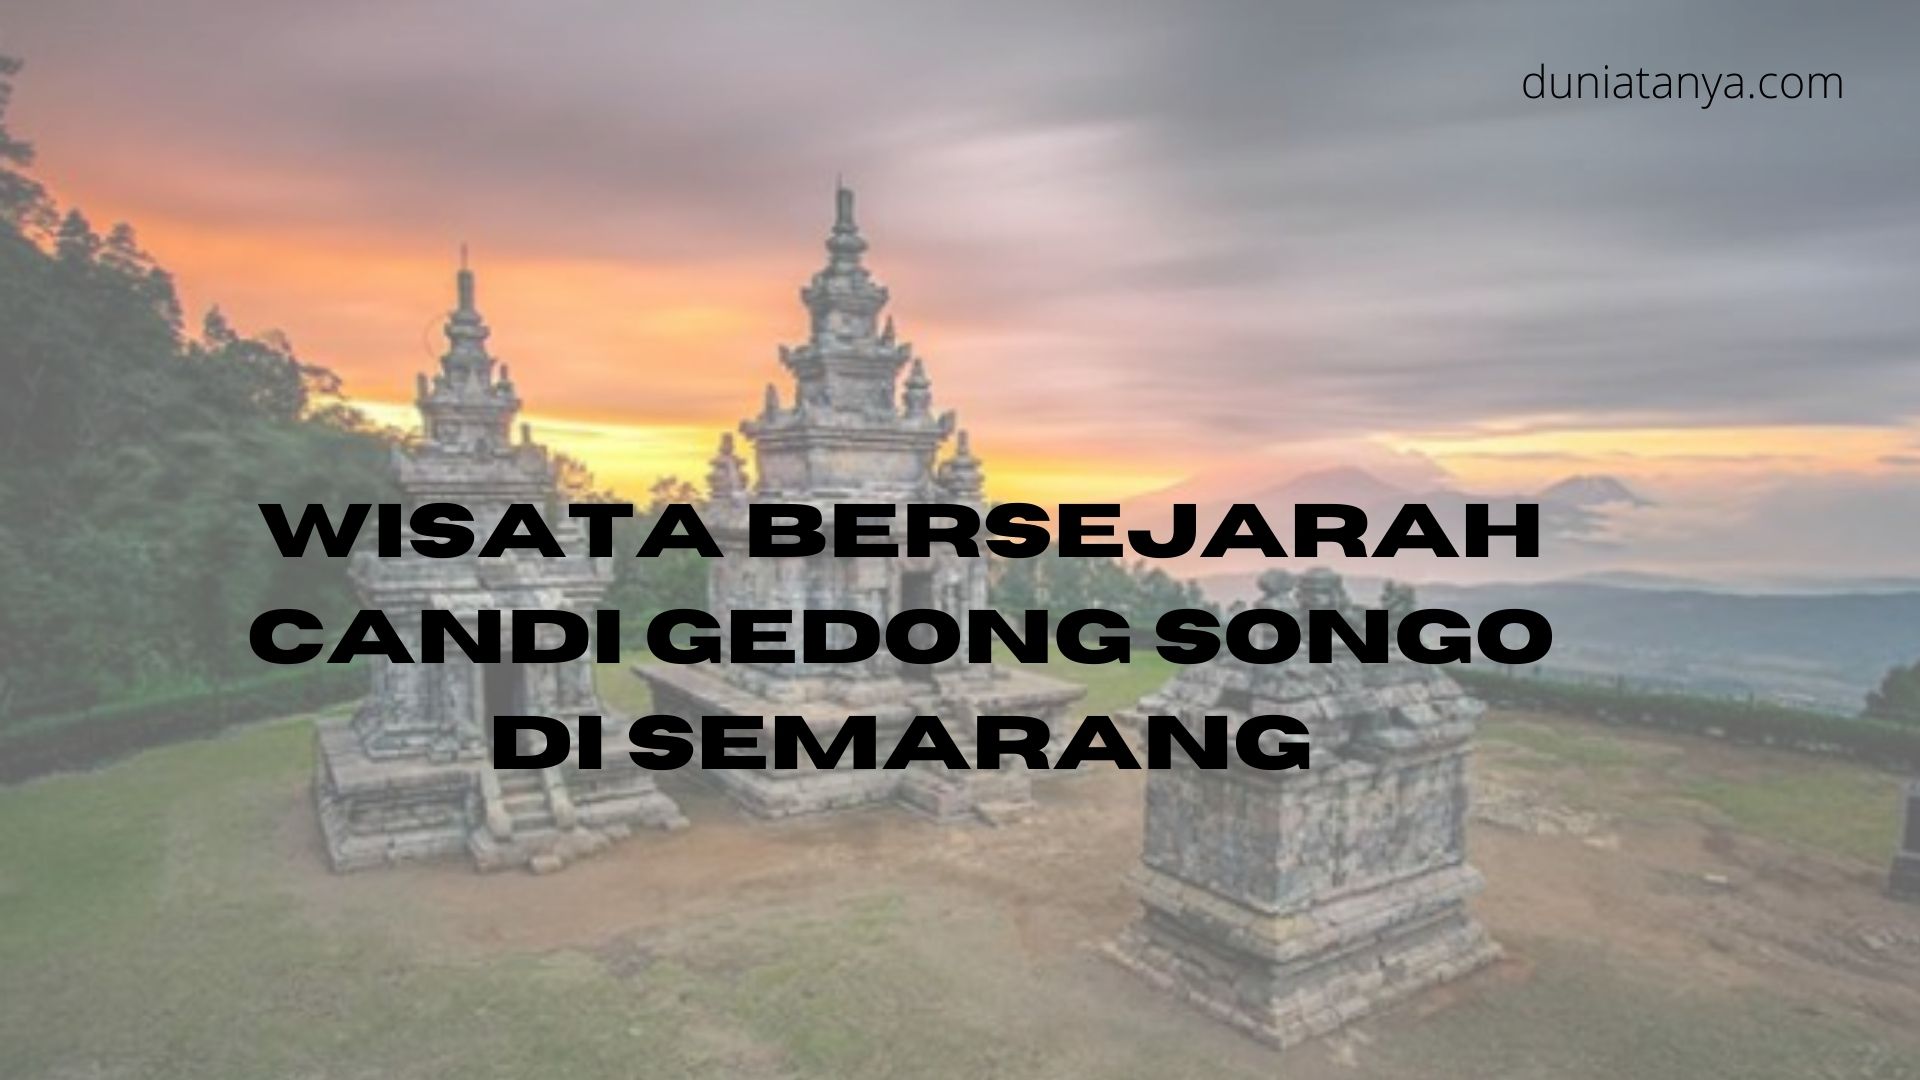 You are currently viewing Wisata Bersejarah Candi Gedong Songo Di Semarang